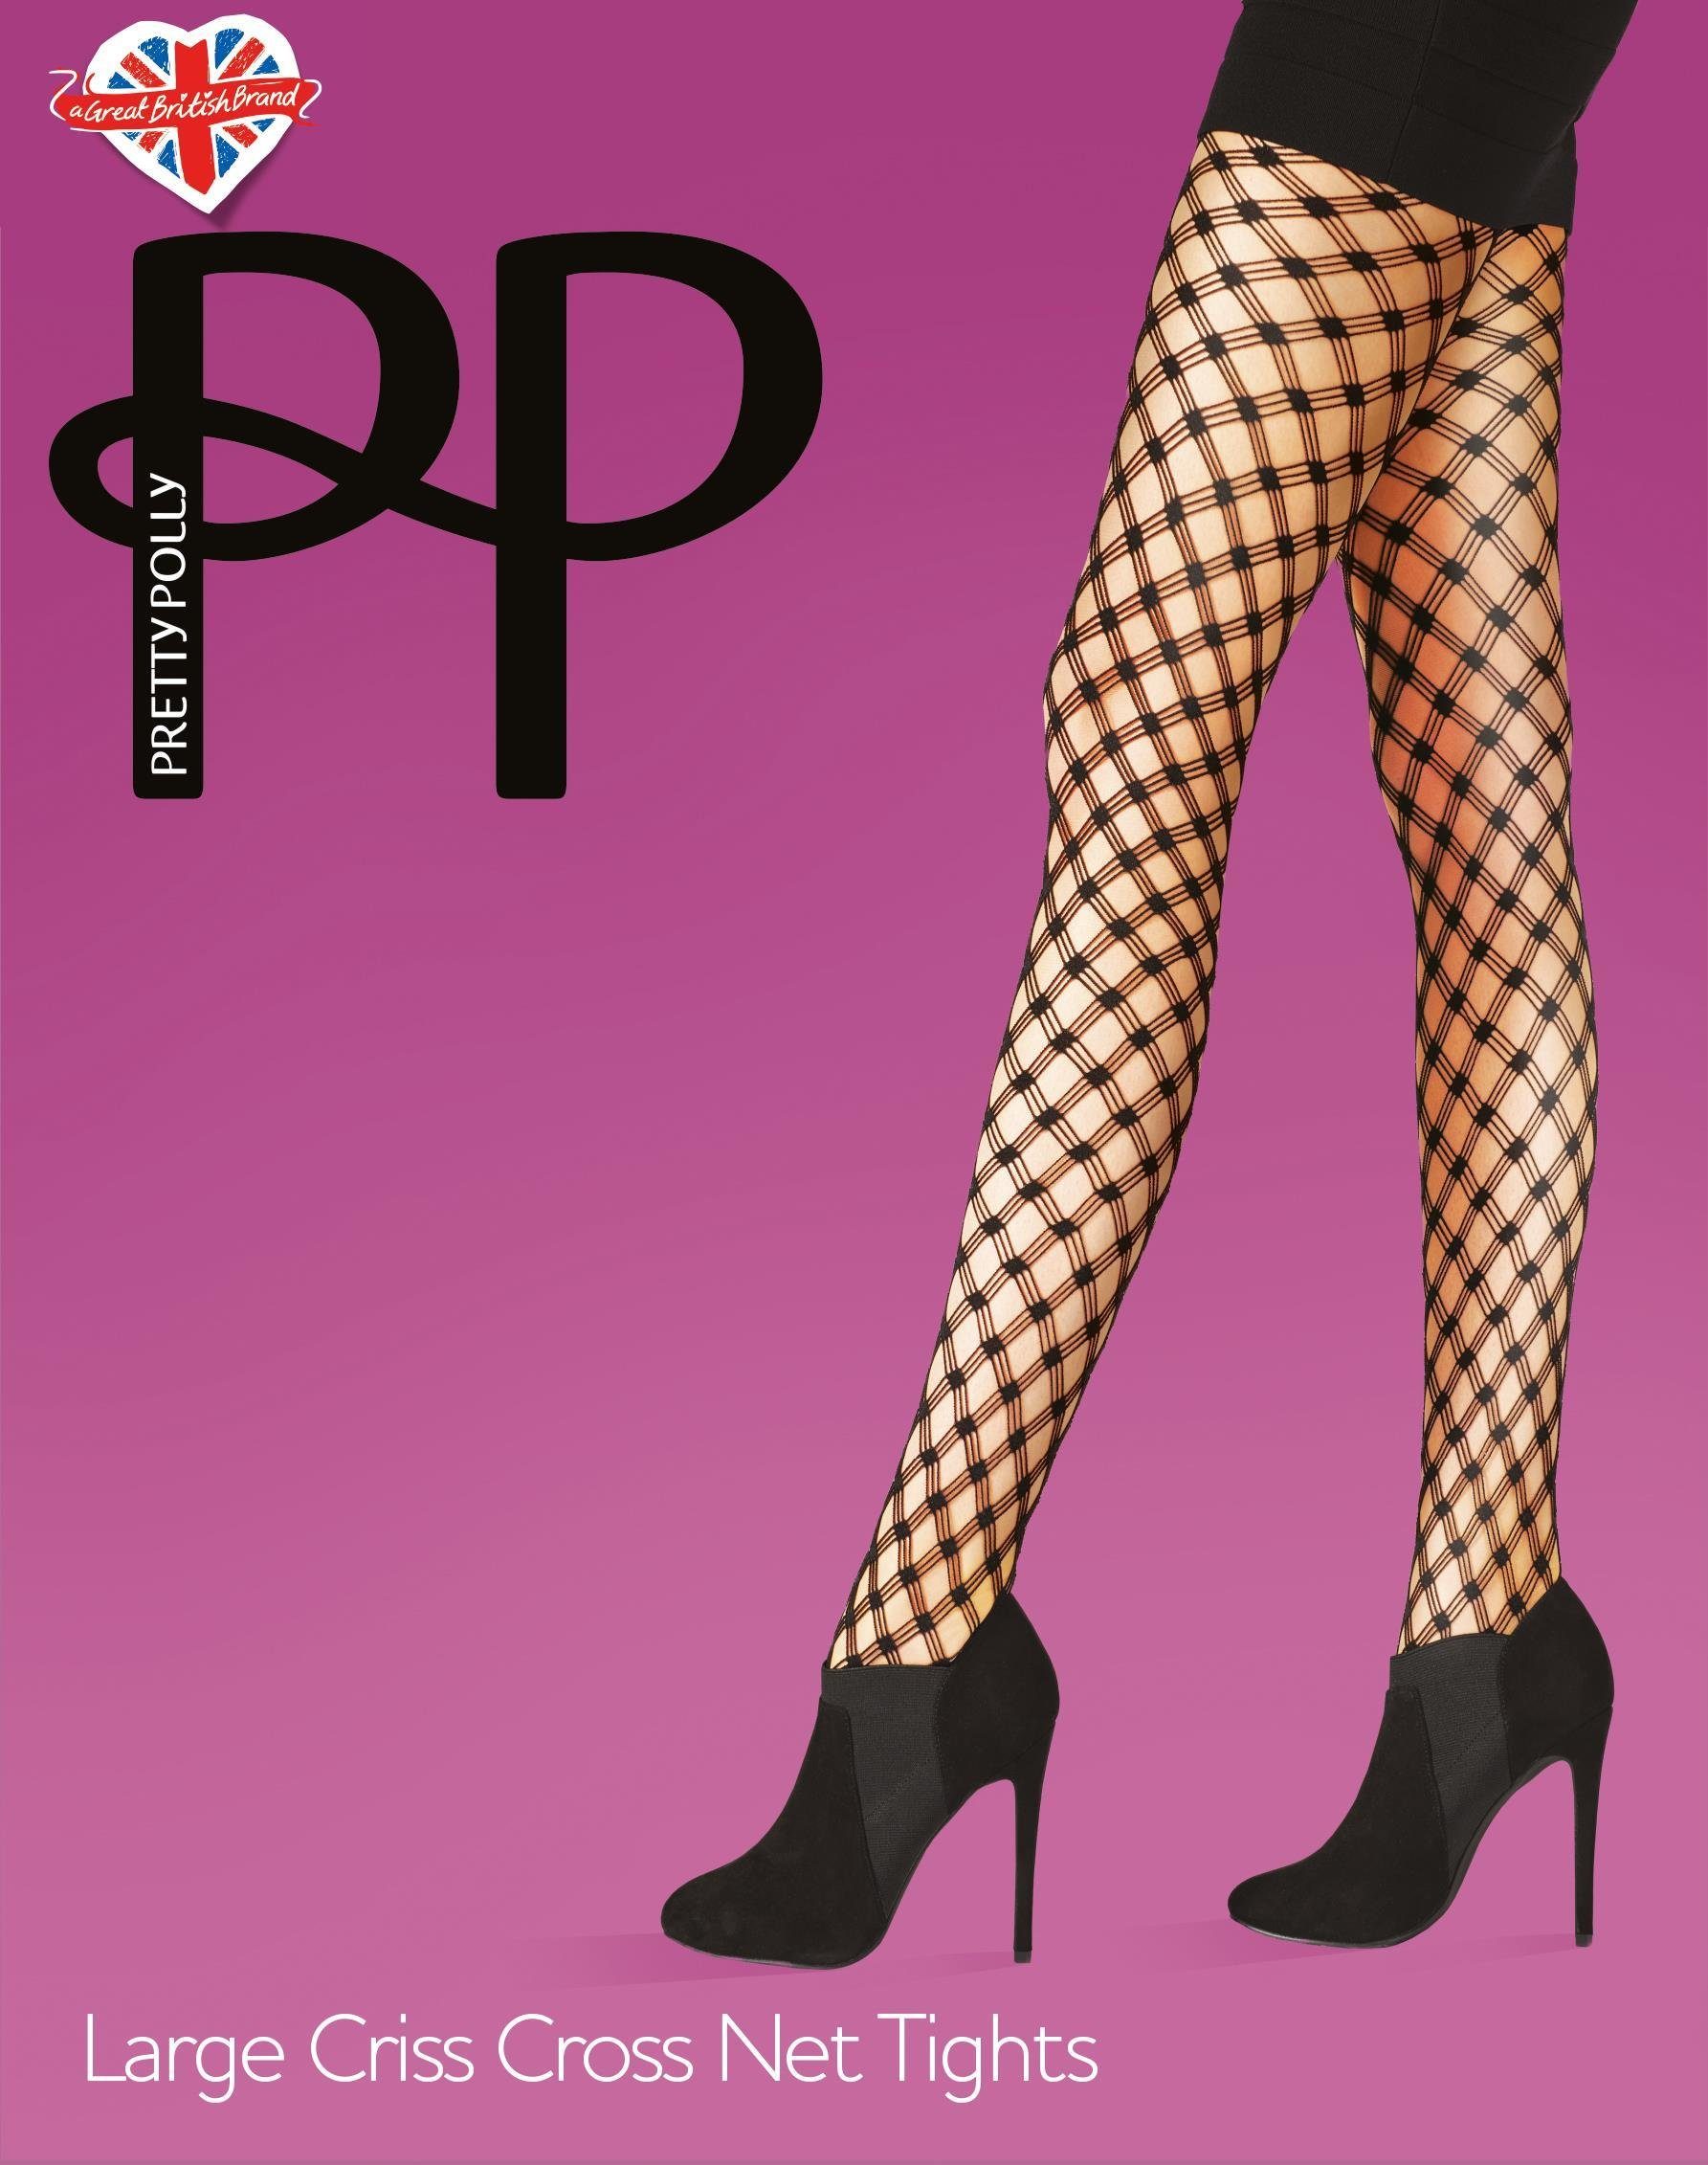 Large DEN ohne St. Pretty Polly Tights Fashion Premium Cross Criss (Strumpfhose Naht 15 1 Feinstrumpfhose Spitze/Netz) Net